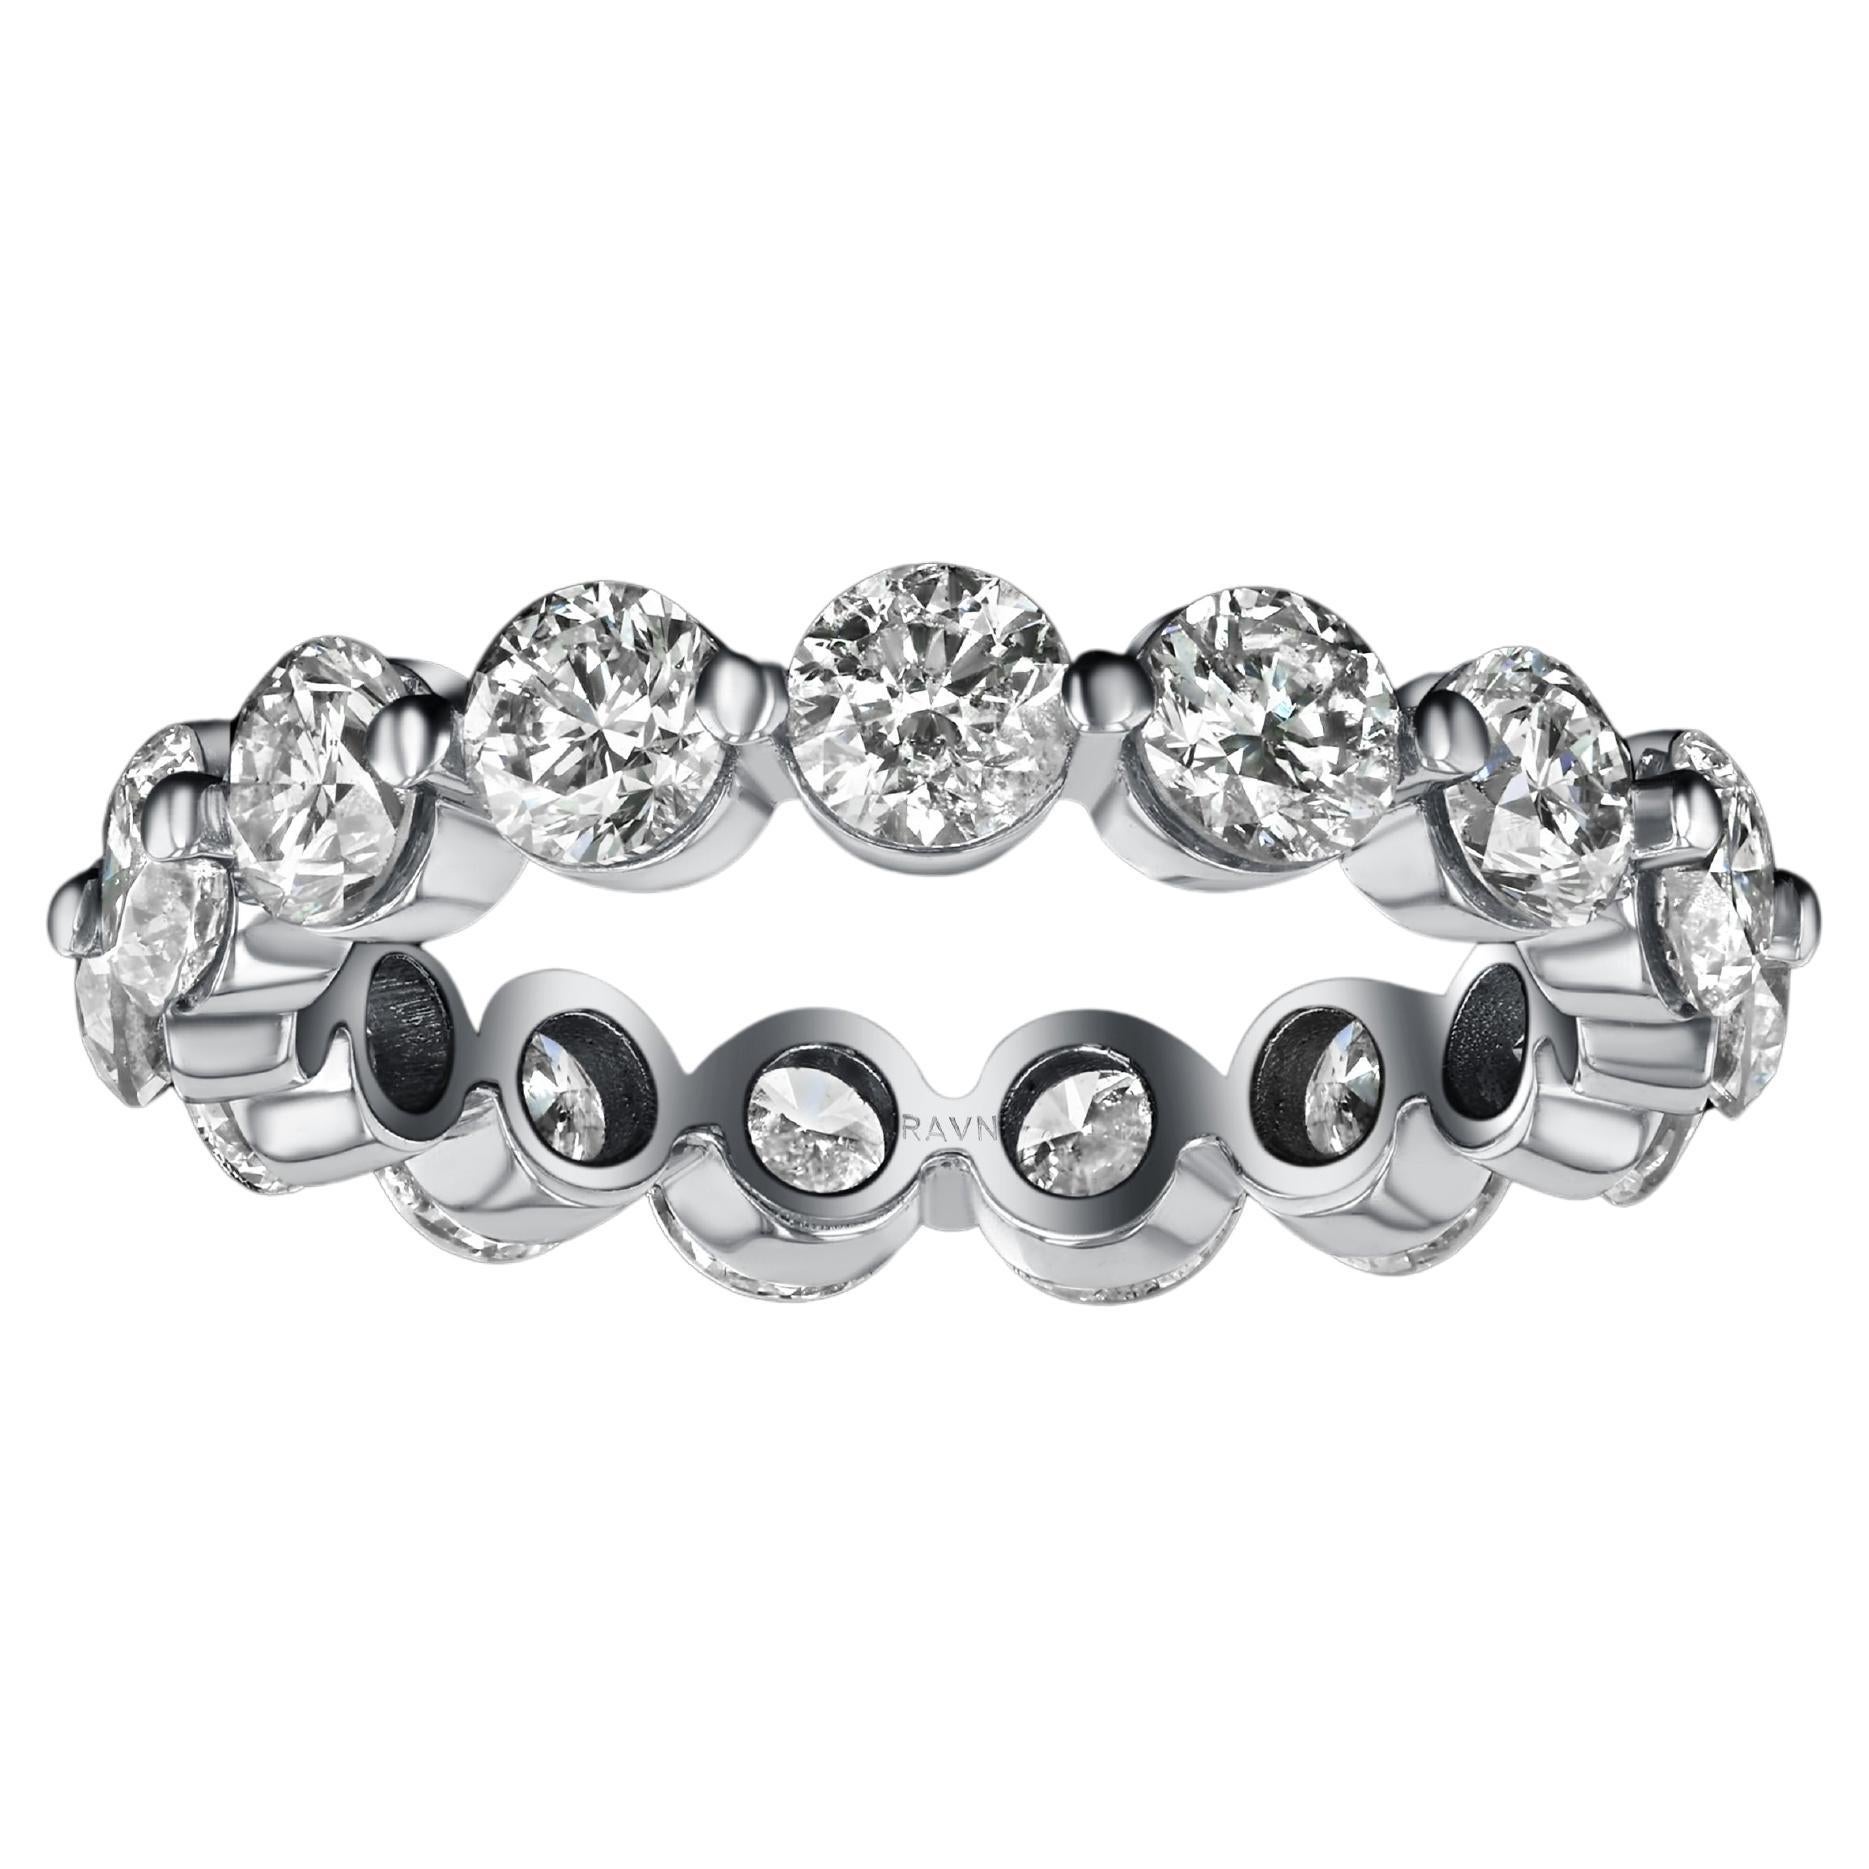 For Sale:  House of RAVN, 18k White Gold, Arpeggio Diamond Eternity Ring with 15 Diamonds